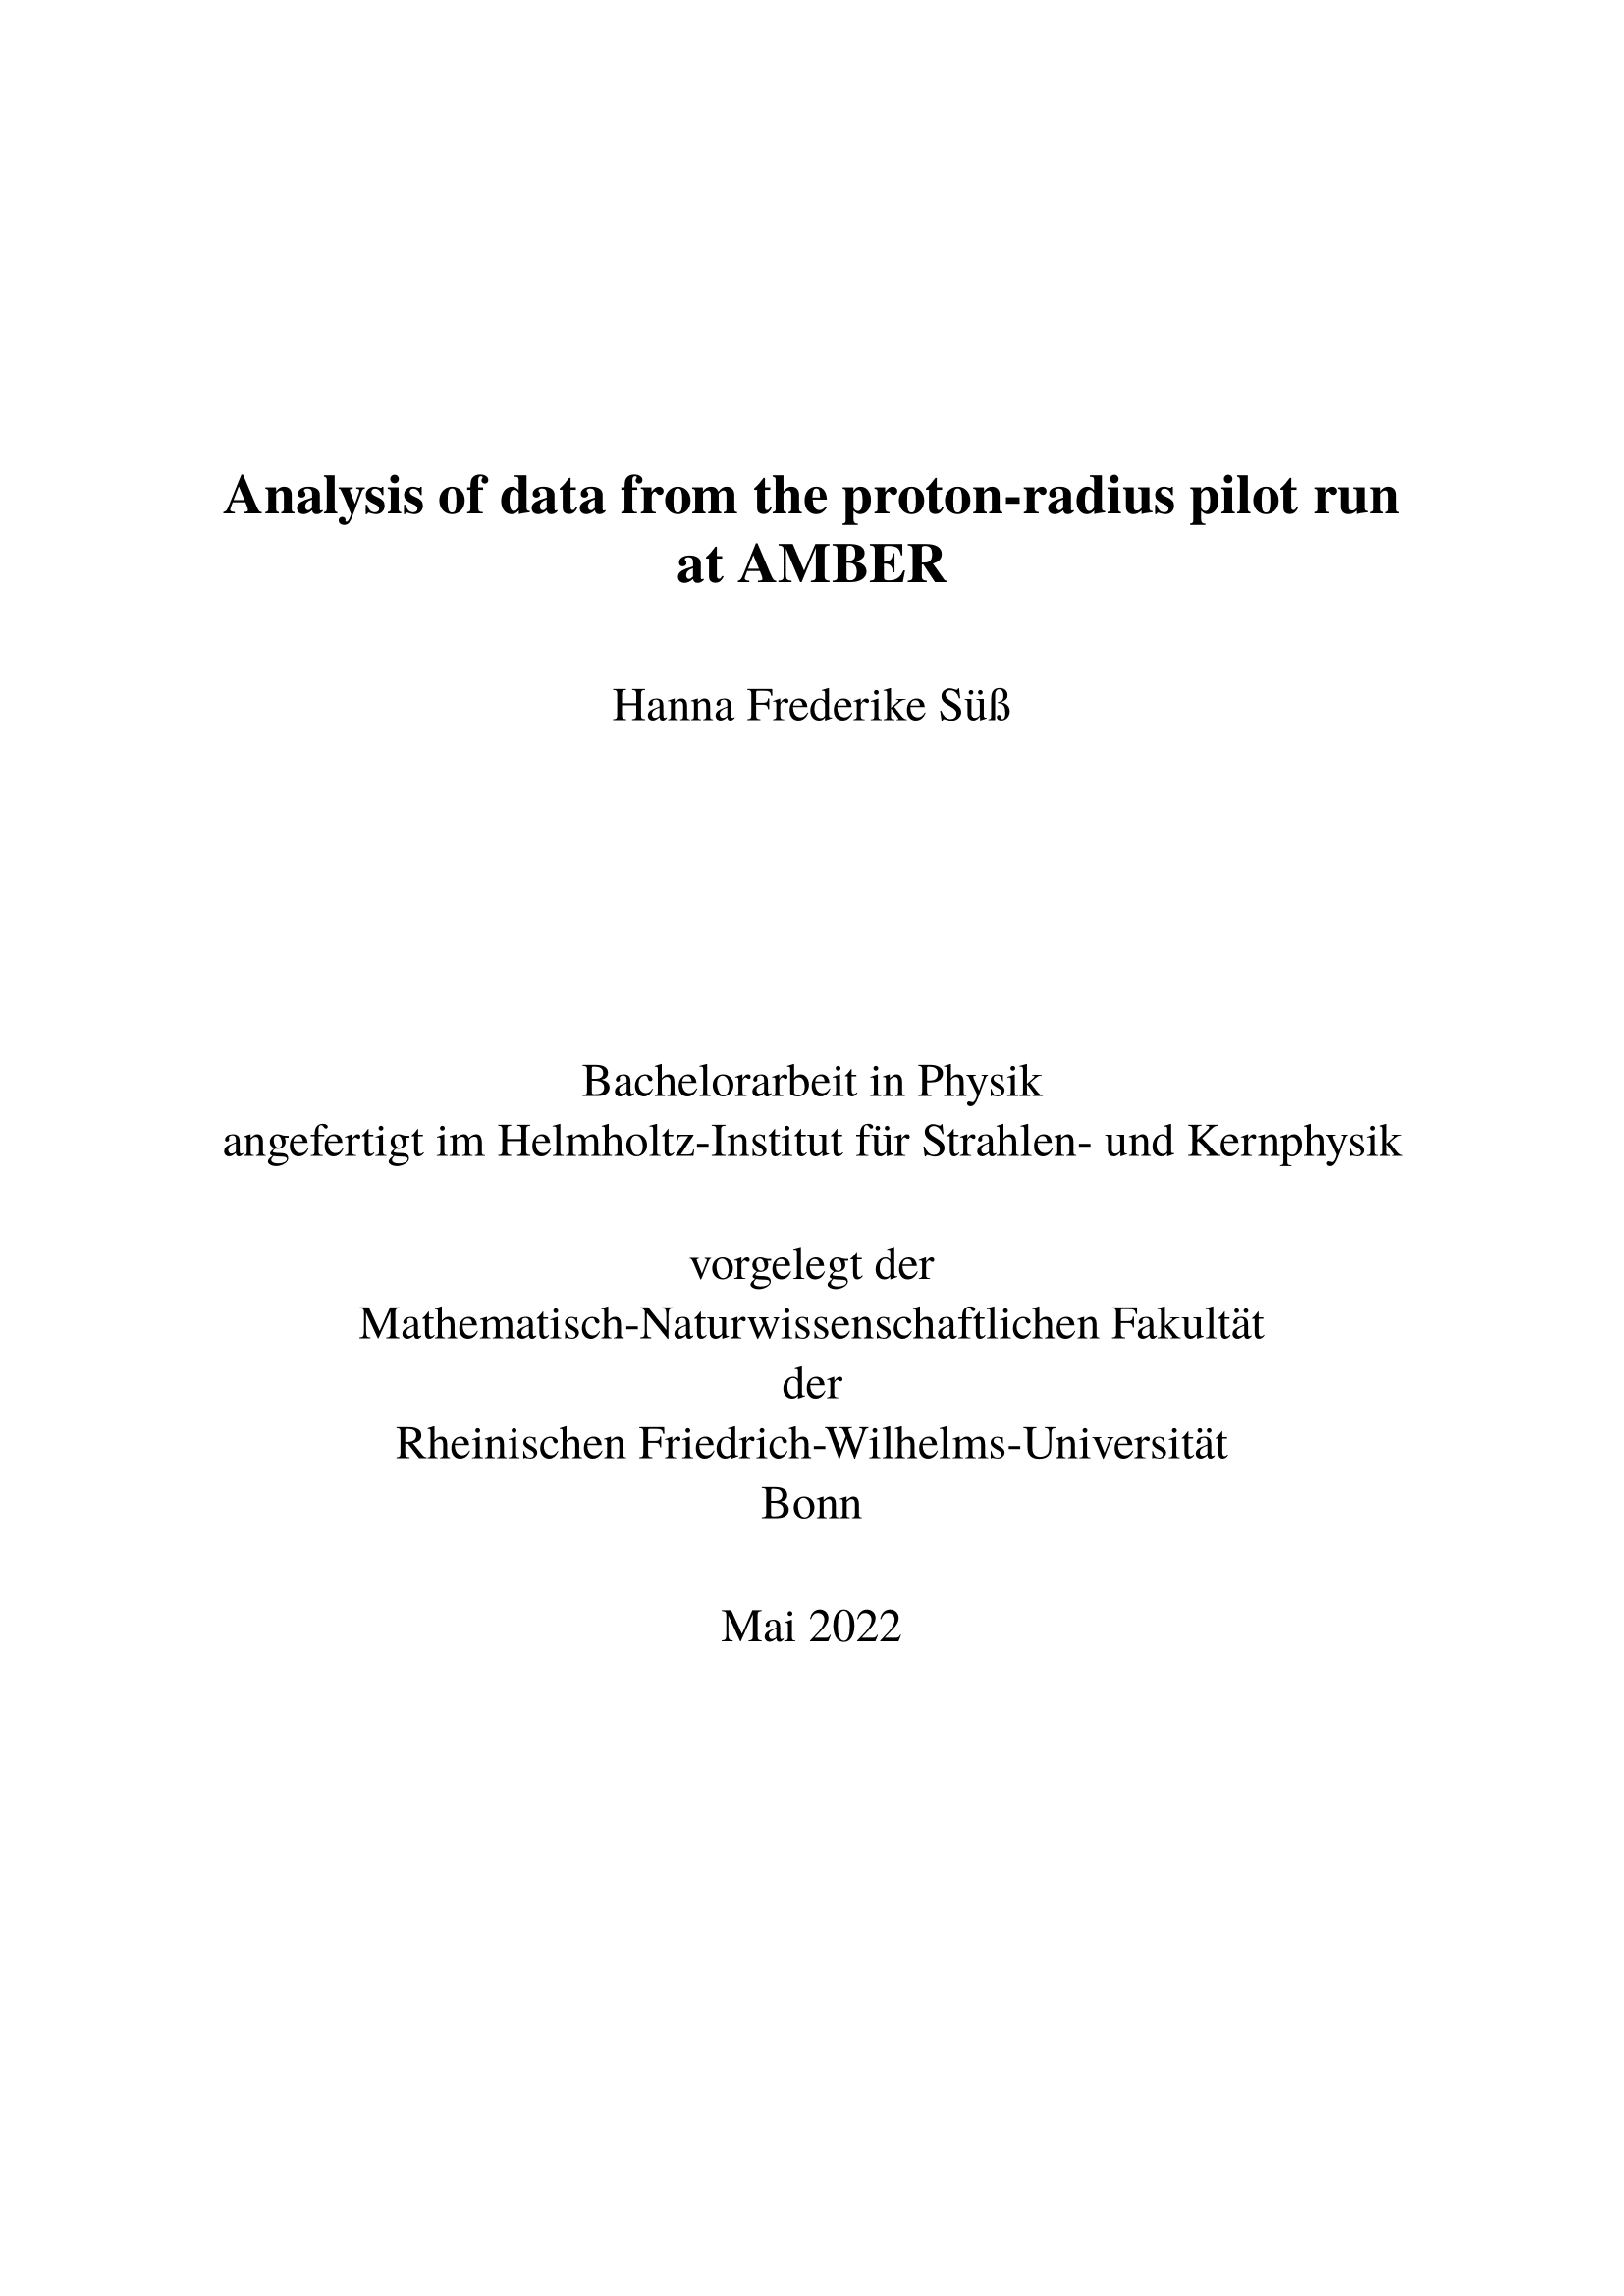 Analysis of data from the proton-radius pilot run at AMBER